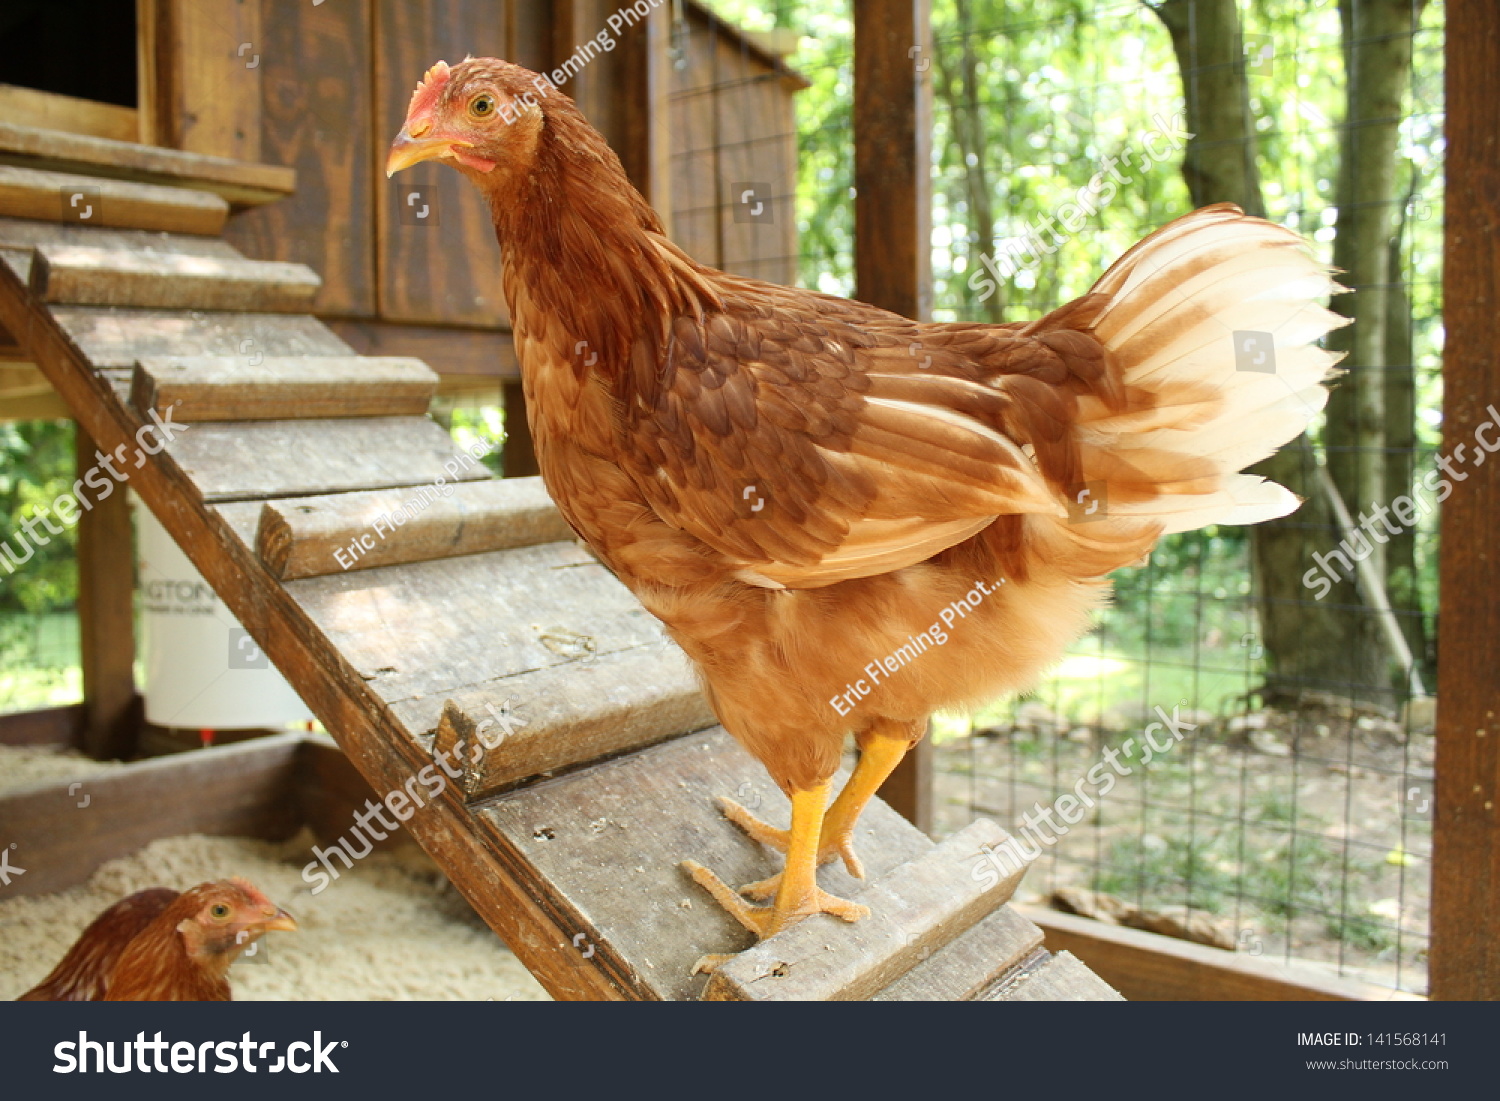 Backyard Chicken farming #141568141